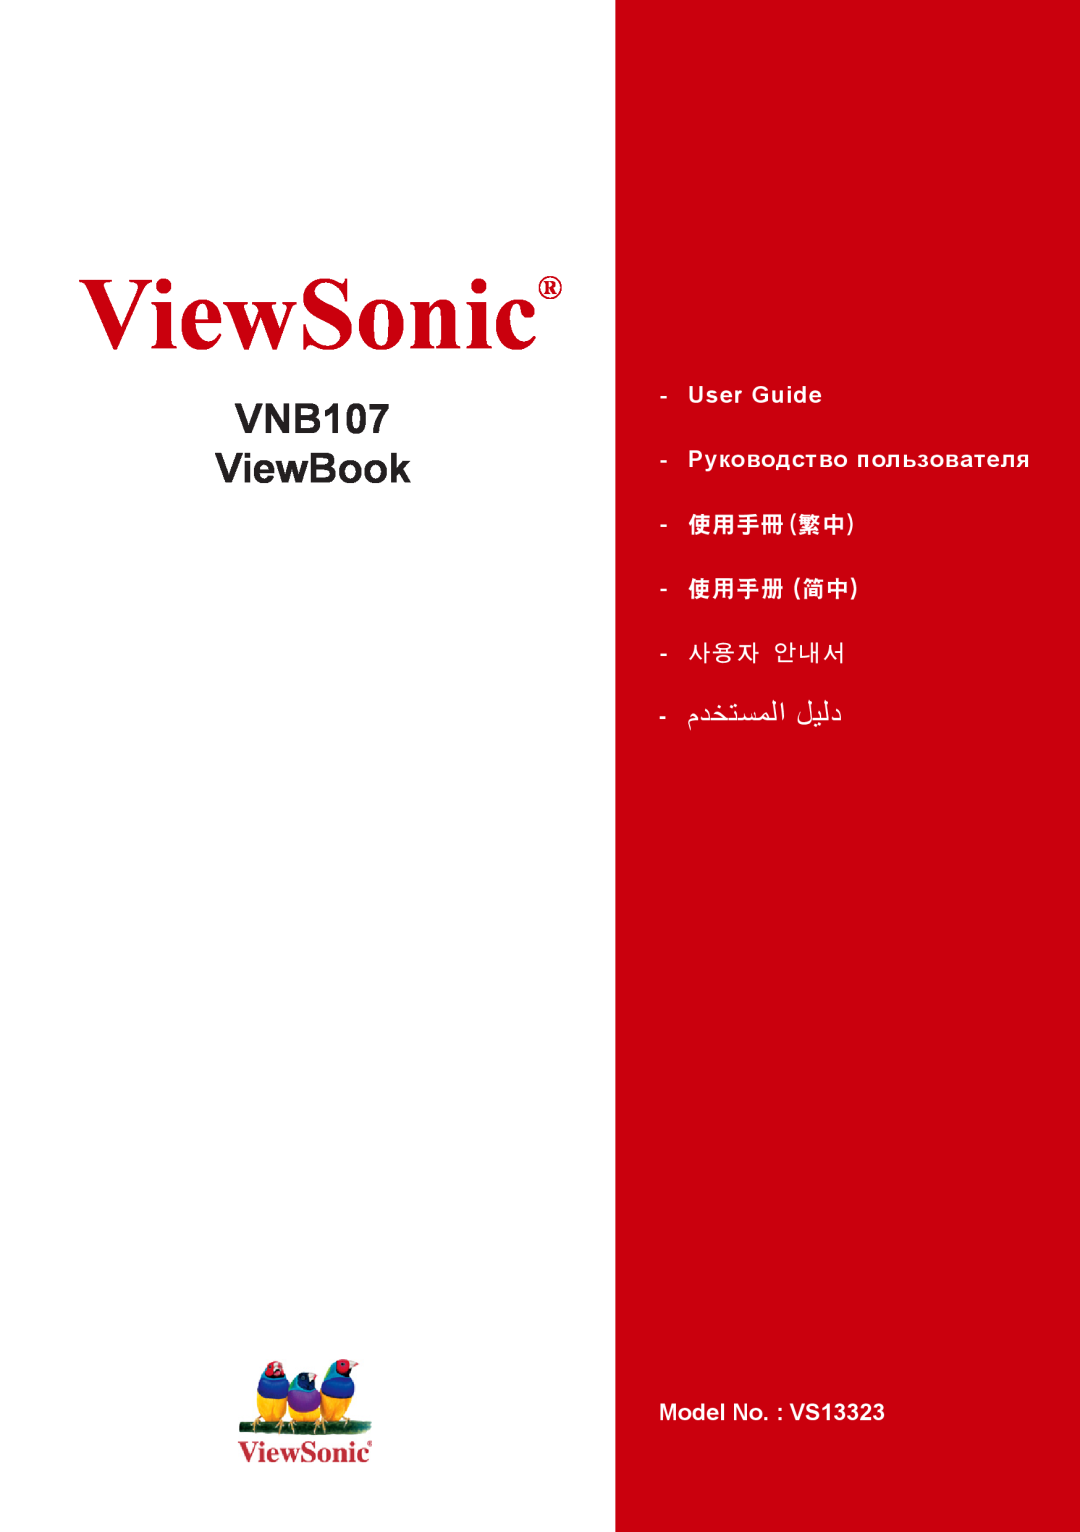 ViewSonic VS13323 manual ViewSonic, VNB107 ViewBook, ﻢﺪﺨﺘﺴﻤﻠﺍ ﻞﻴﻠﺪ, User Guide Pyководство пользователя, 使用手冊繁中 使用手冊 簡中 